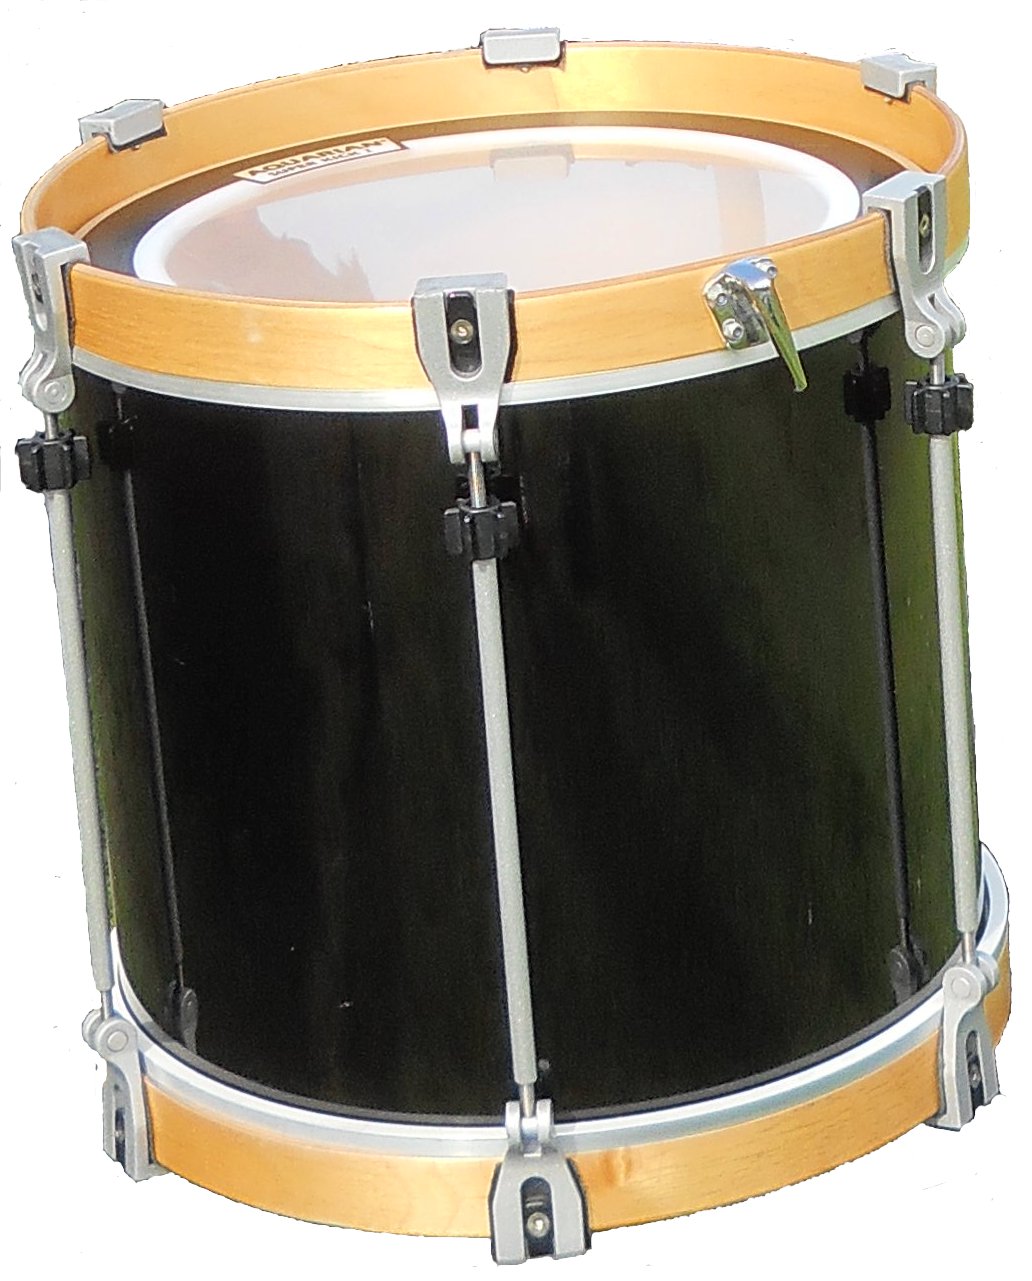 File:Scottish Tenor Drum.jpg  Wikipedia, the free encyclopedia